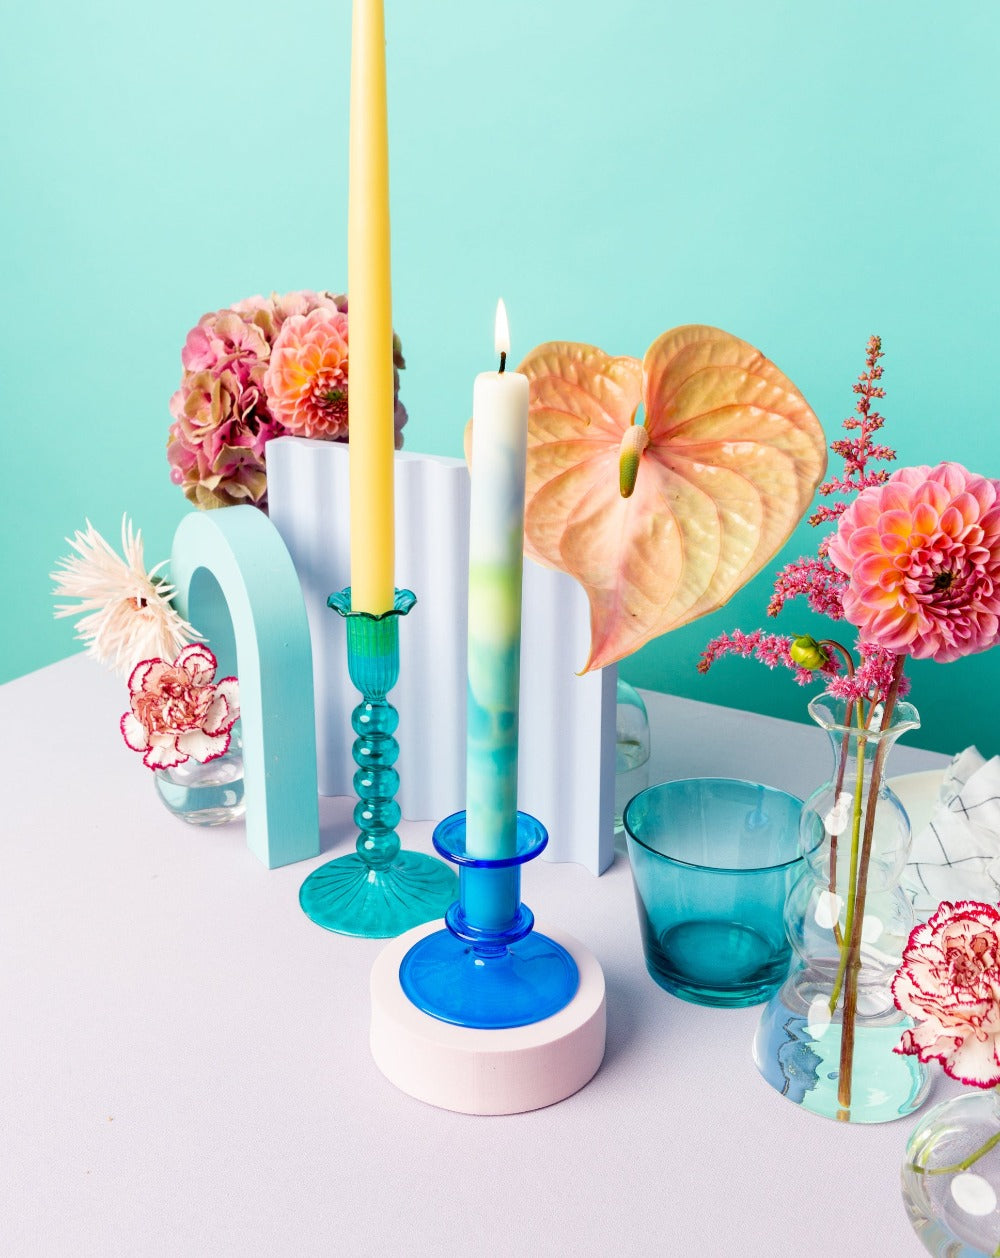 Studio Dine Store Cobalt Blue Candle Holder in playful tablescape